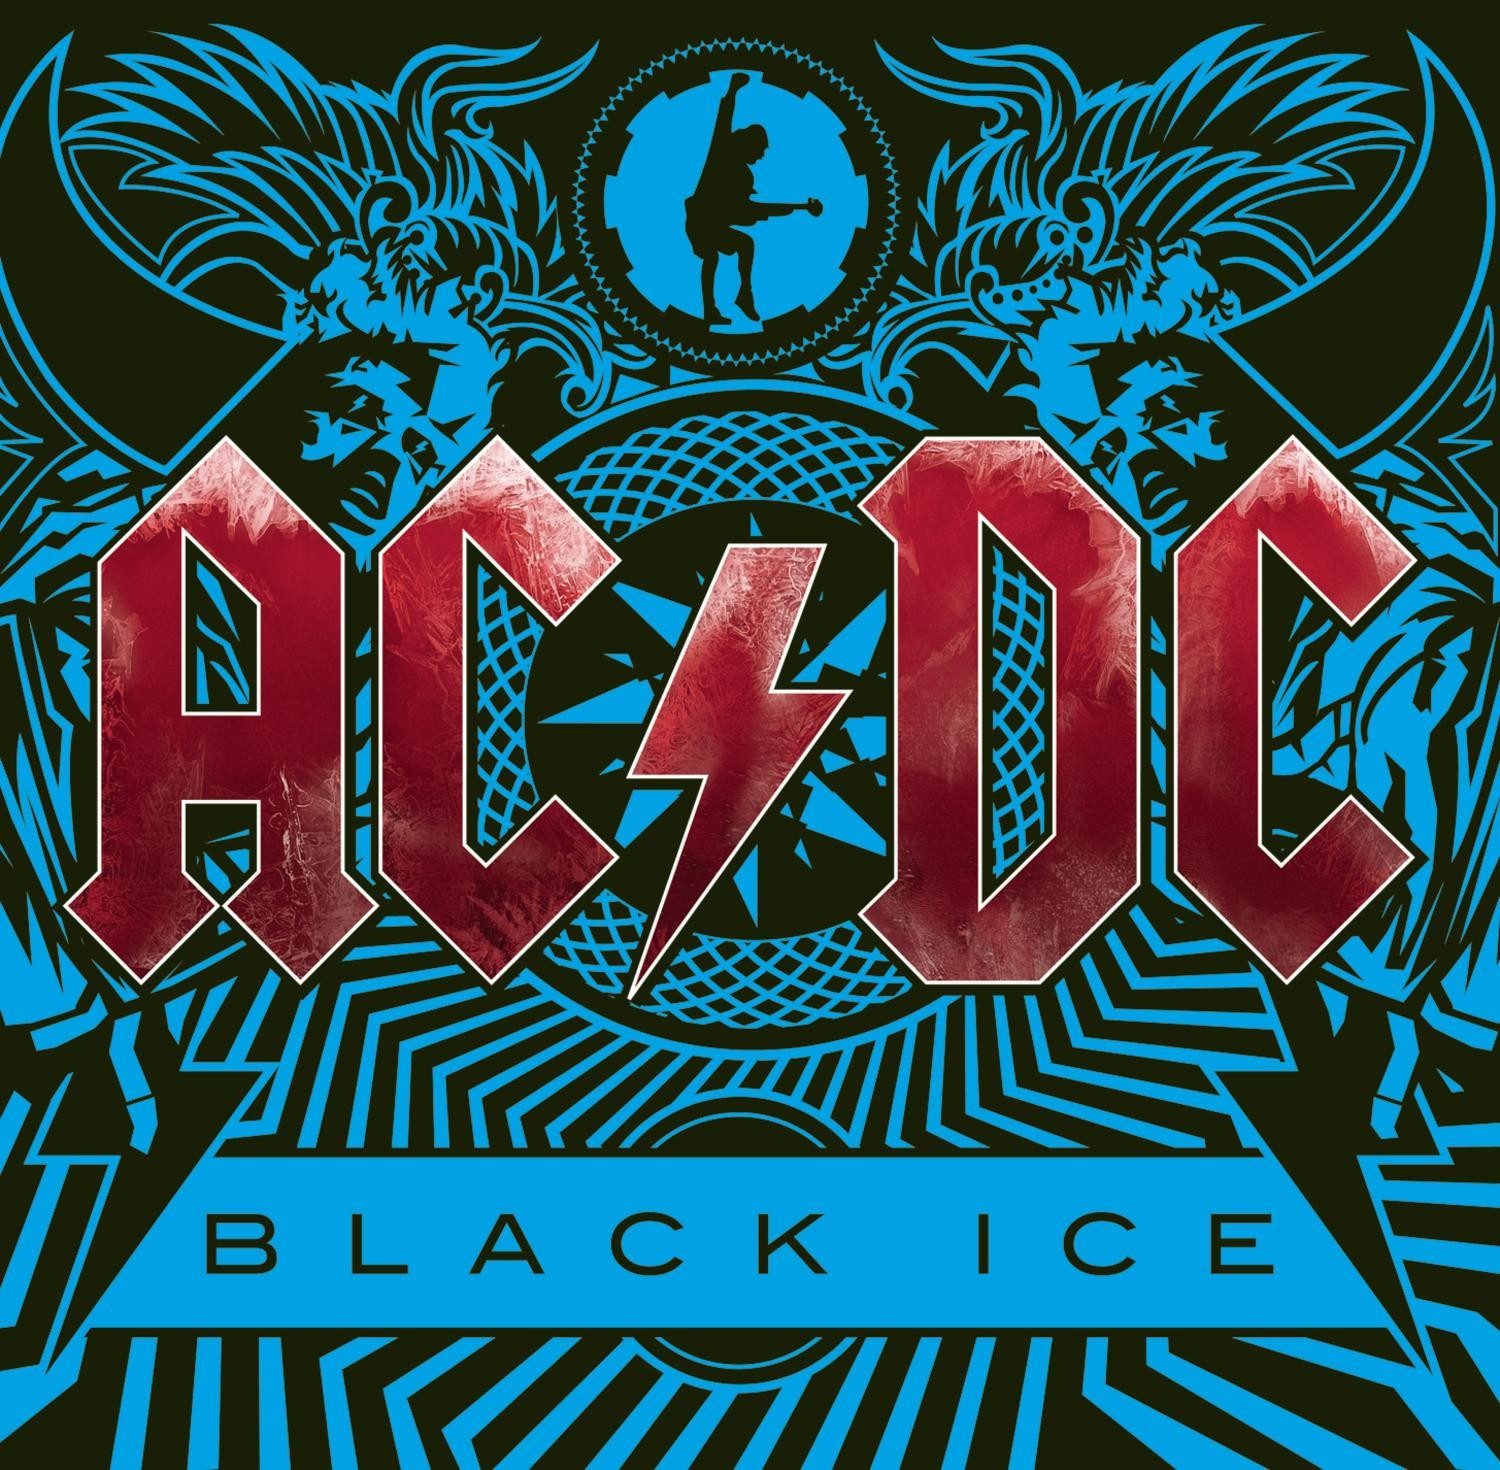 AC/DC - Black Ice 2XLP